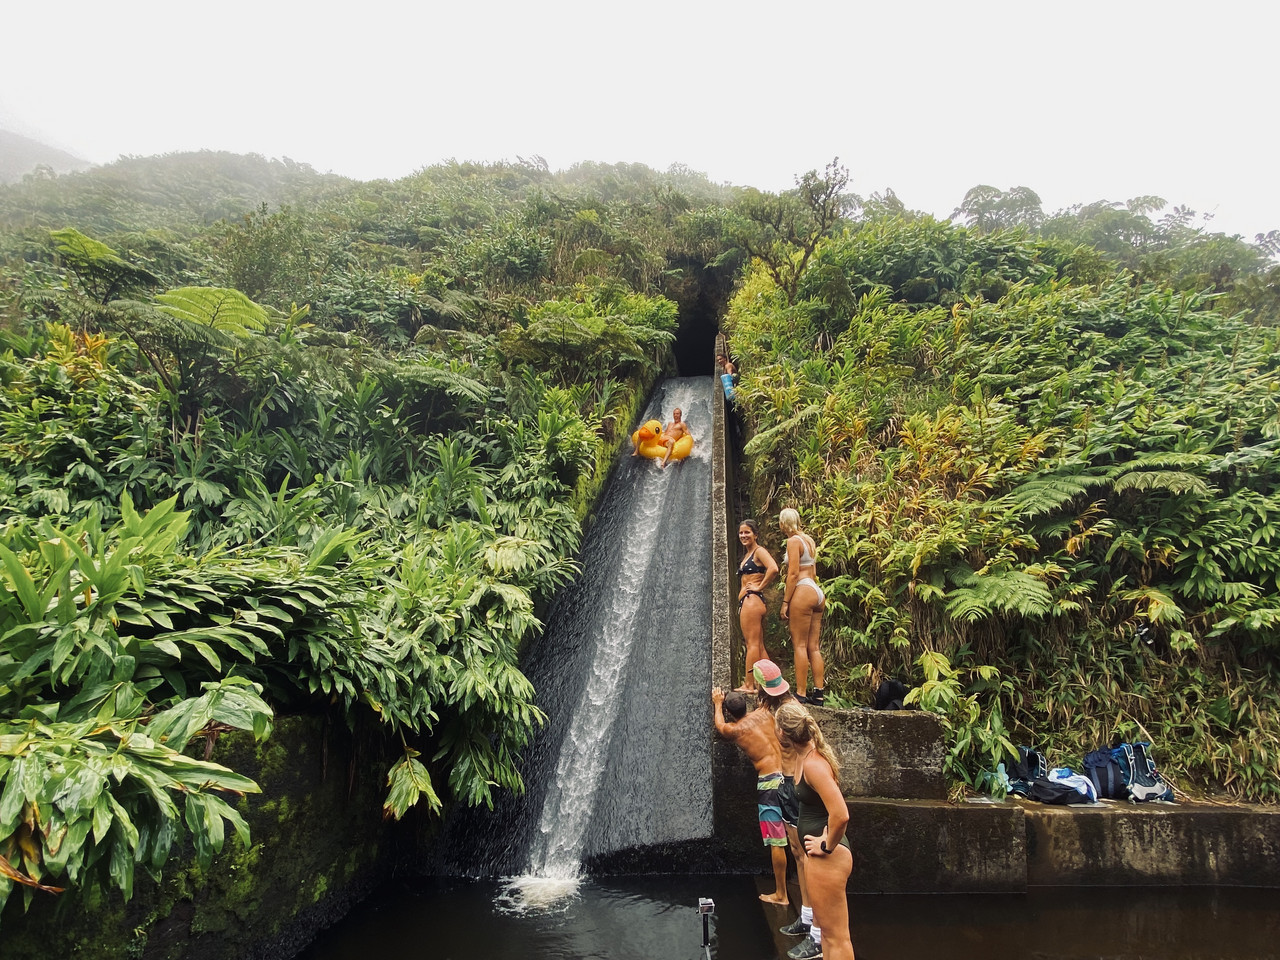 naturligvis vandrutsjebane i hawaii's regnskov